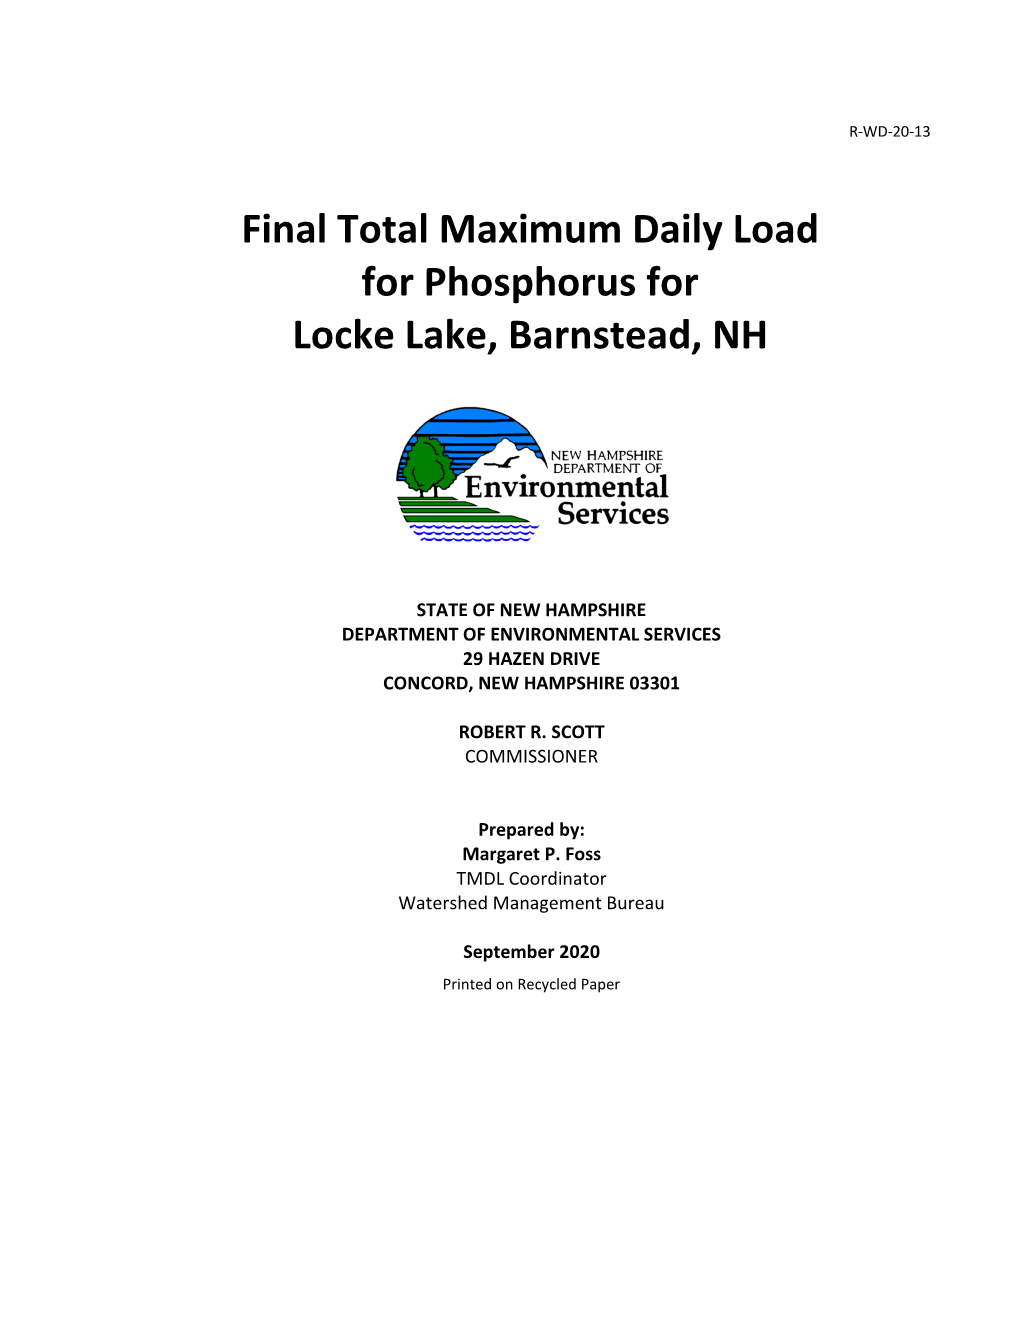 Final Total Maximum Daily Load for Phosphorus for Locke Lake, Barnstead, NH